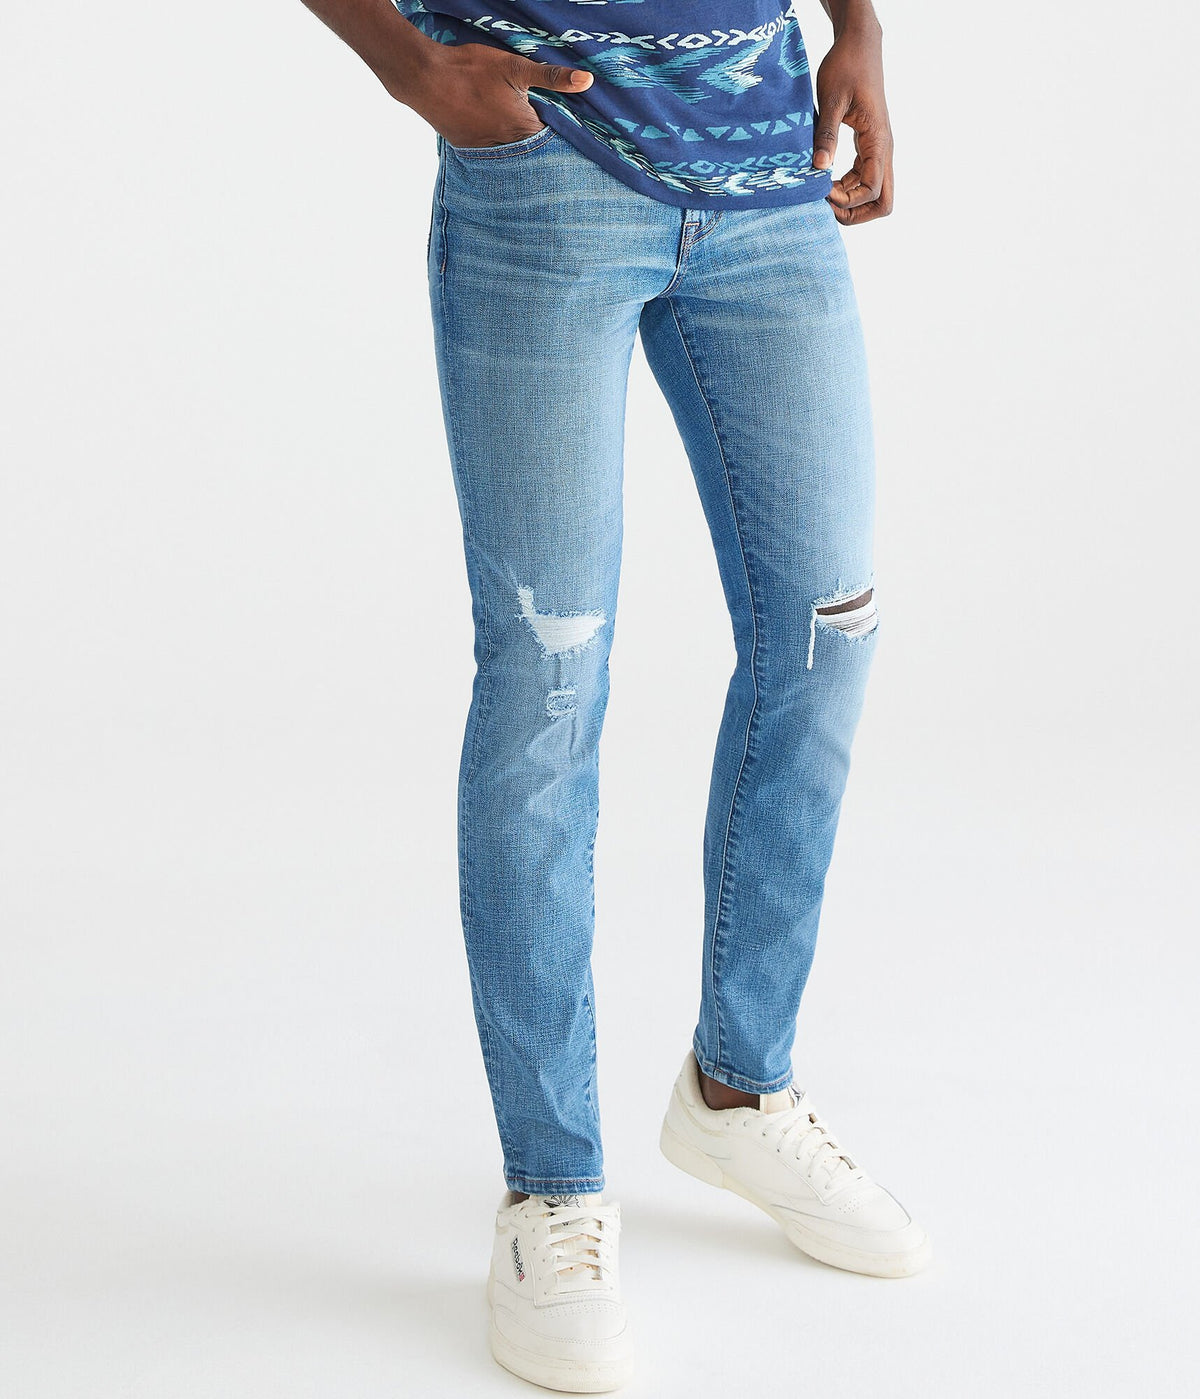 Aeropostale Mens' Super Skinny Premium Jean With COOLMAX Technology - Washed Denim - Size 38X36 - Cotton - Teen Fashion & Clothing Medium Wash